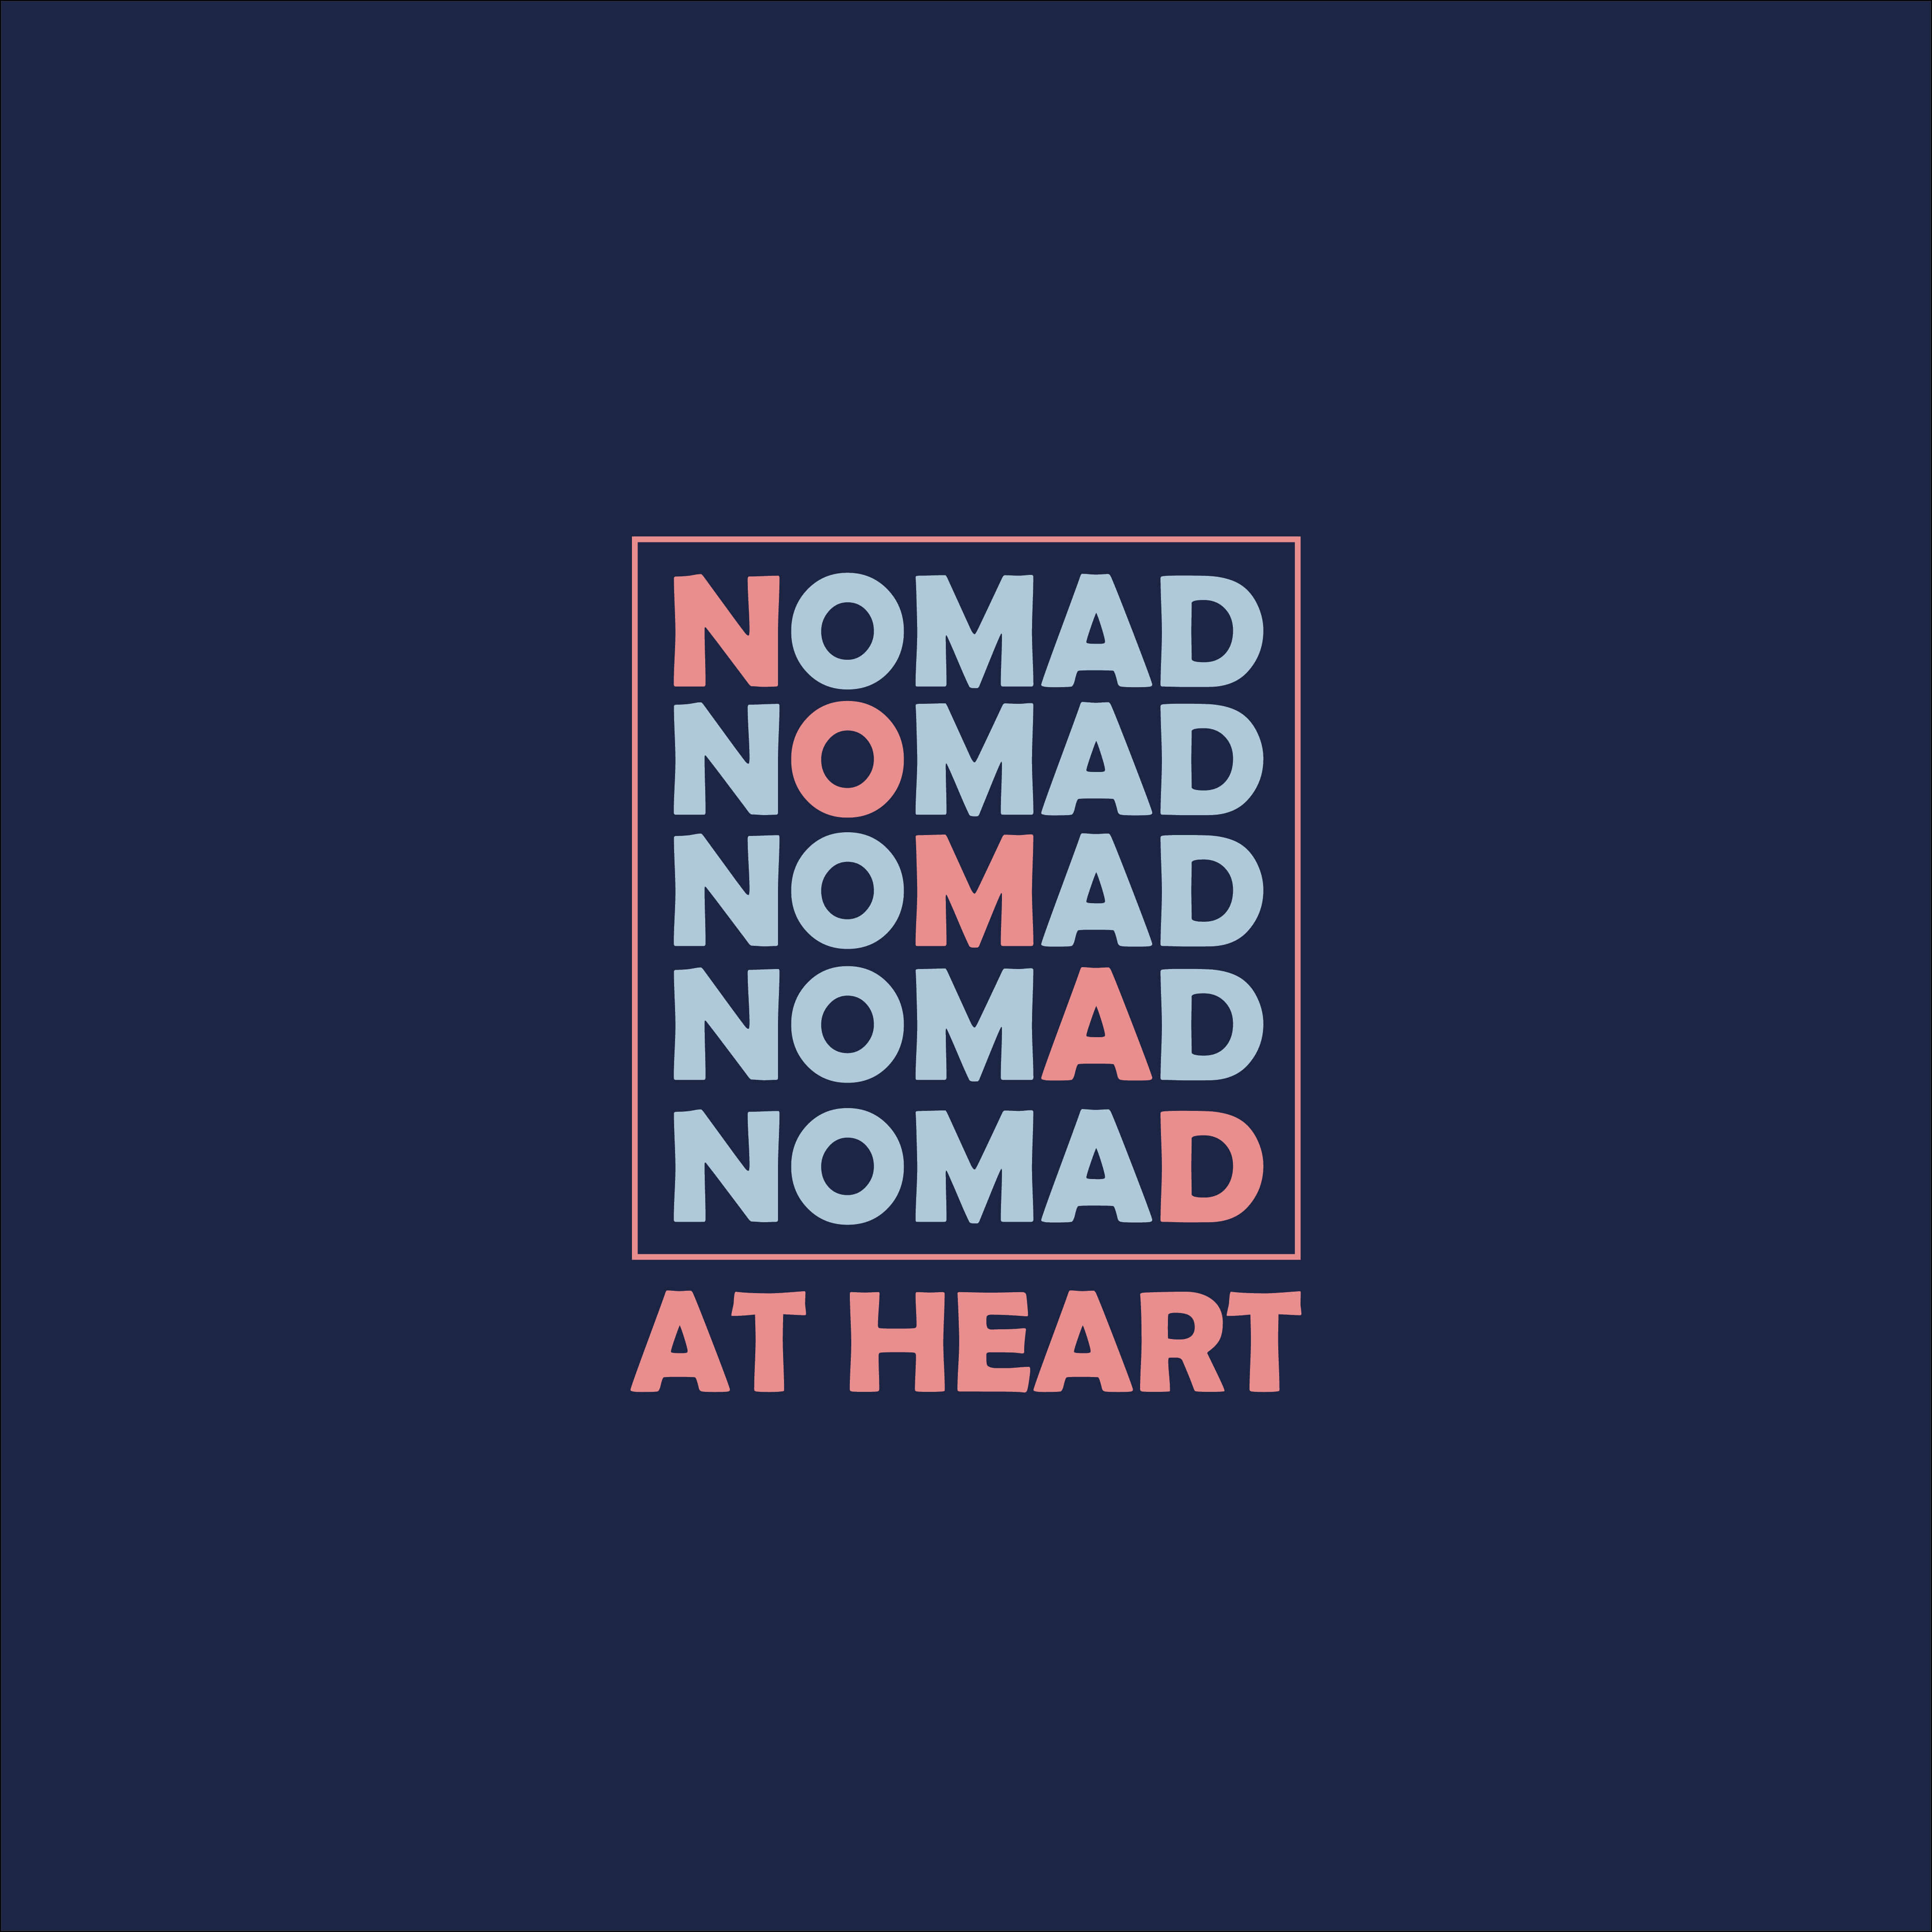 Nomad-04